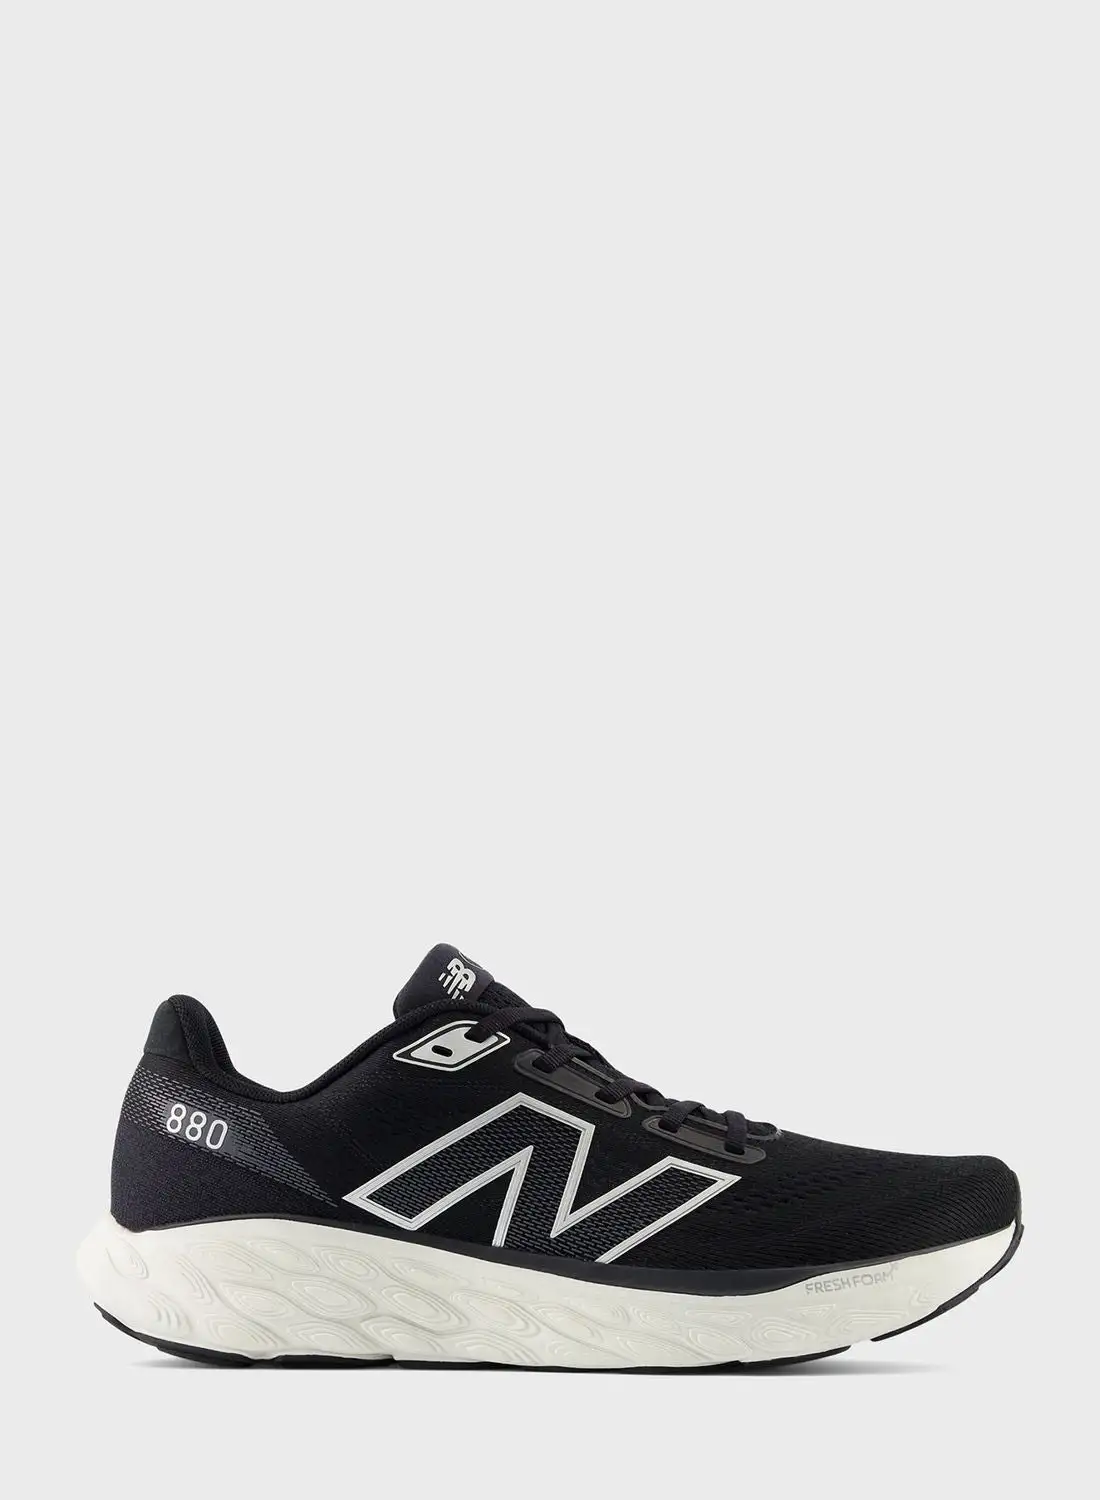 New Balance 880 Running Shoes